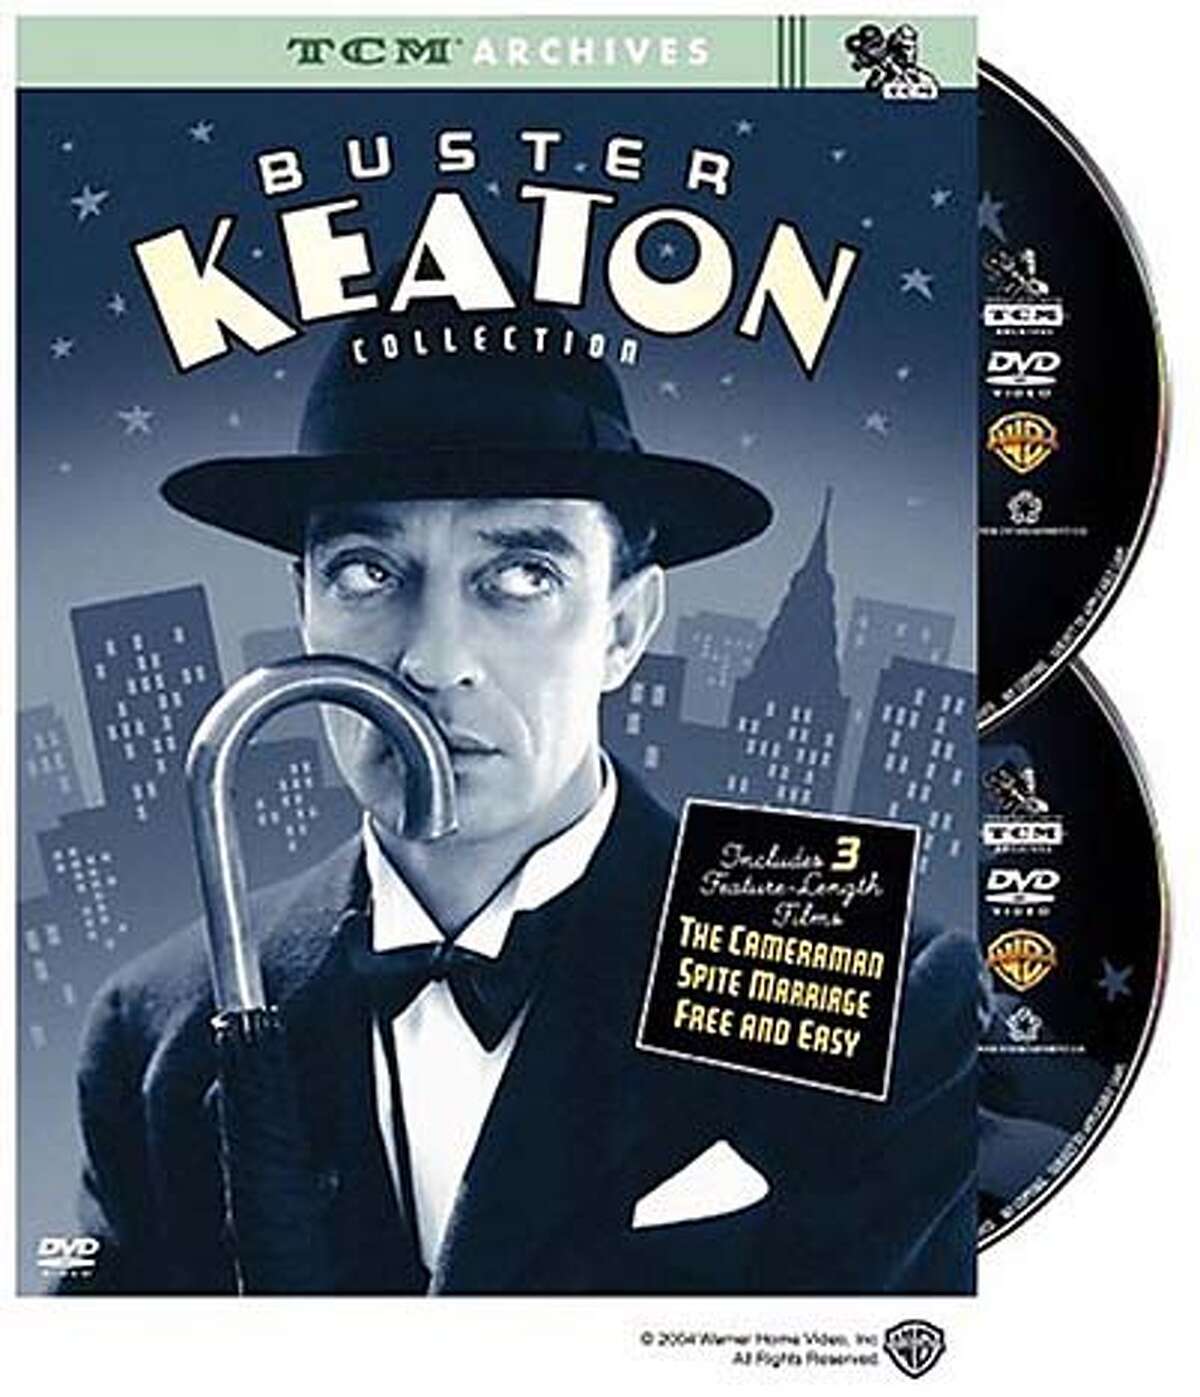 DVD cover art for "Buster Keaton Collection". Datebook#Datebook#SundayDateBook#12-12-2004#ALL#Advance##0422491655